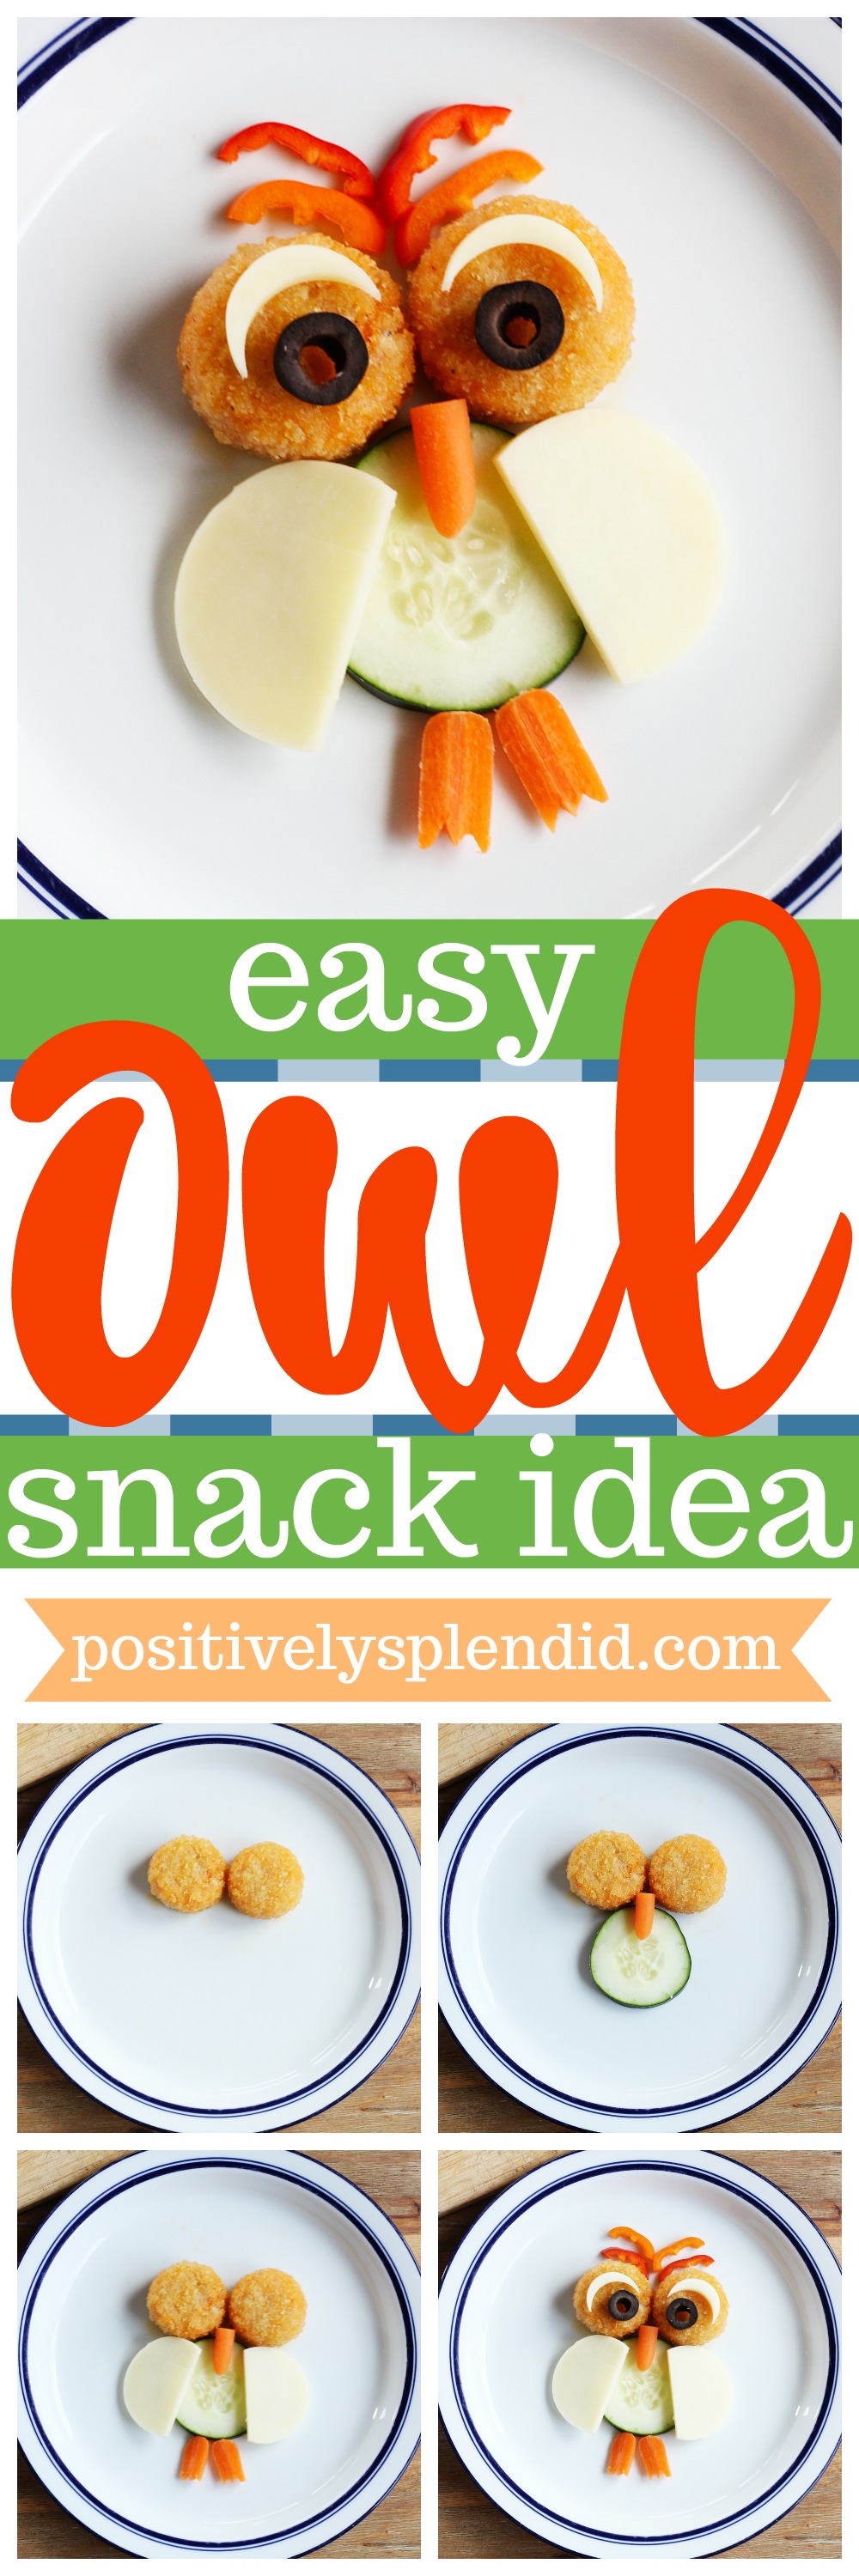 Easy Owl Kids' Snack Idea